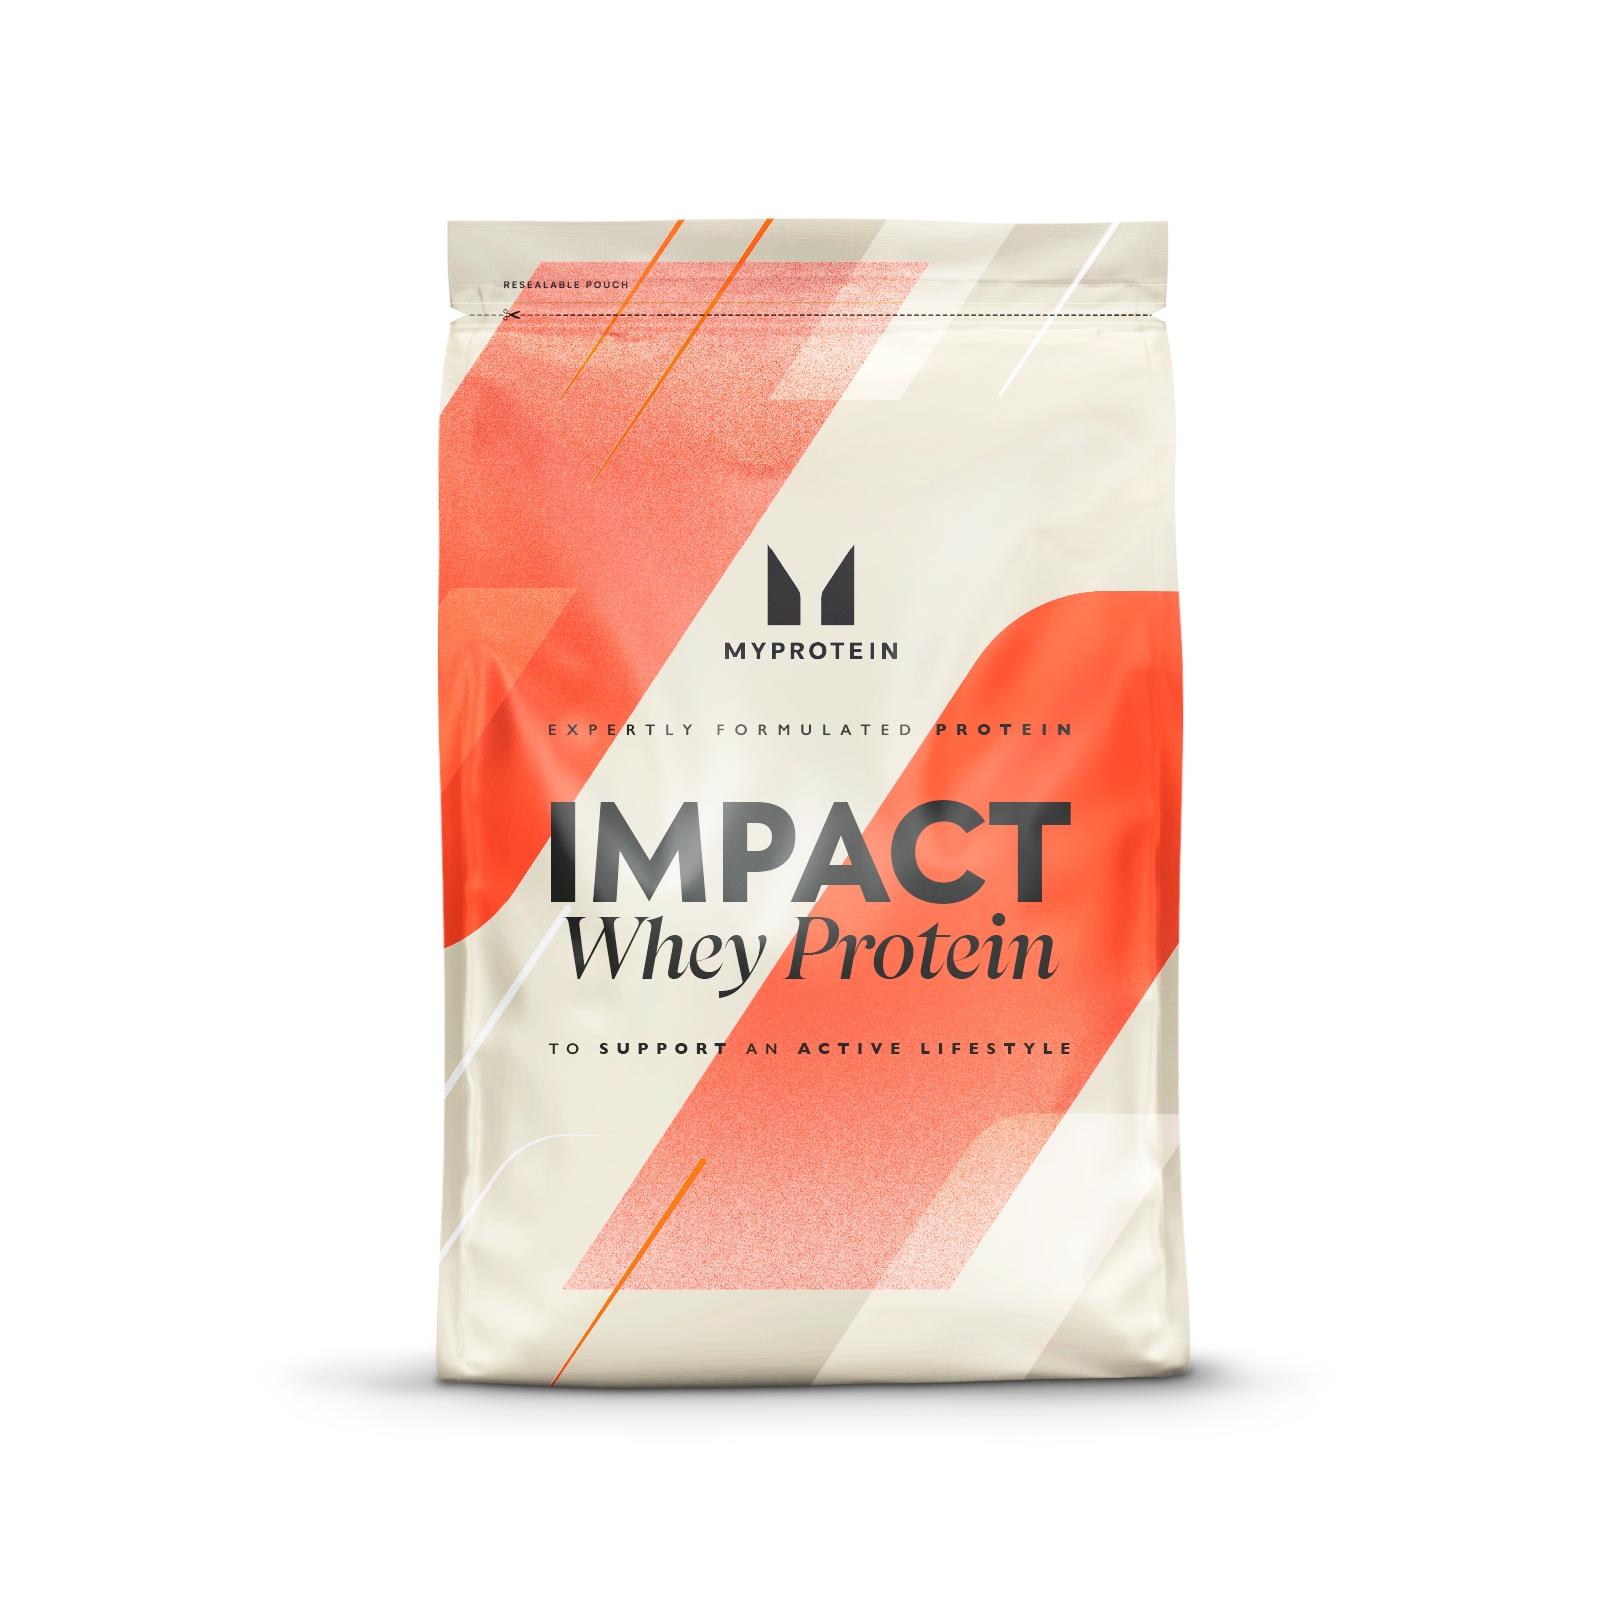 Impact Whey Protein - 1kg - แอปเปิ้ล ครัมเบิล และ คัสตาร์ด